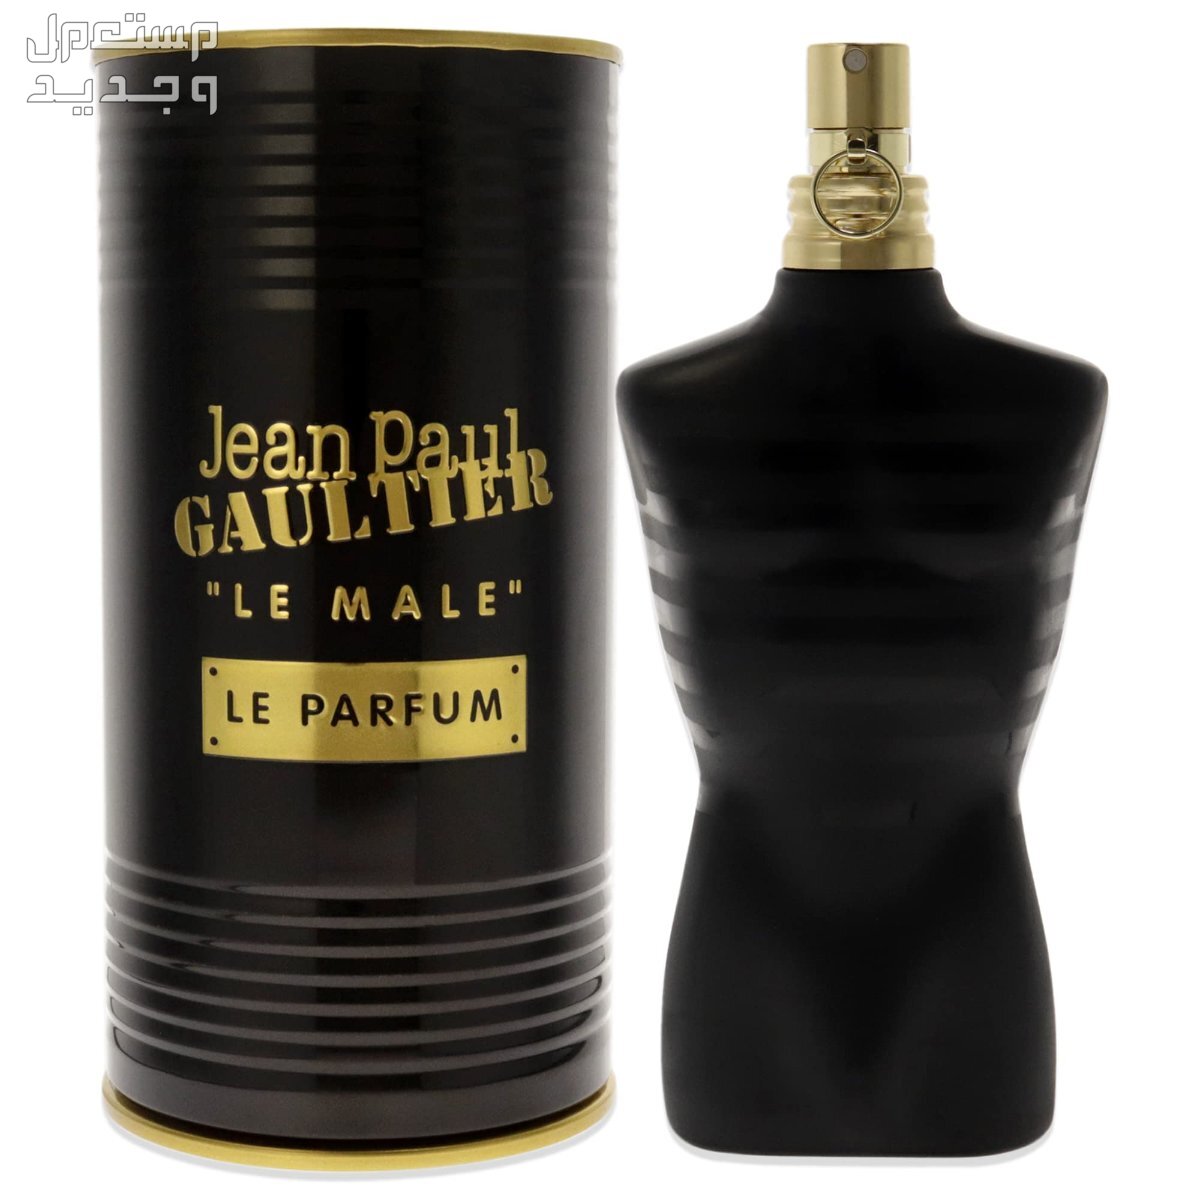 أقوى عطر فانيلا رجالي بأفضل سعر في المغرب عطر Jean Paul Gaultier Le Male Le Parfum